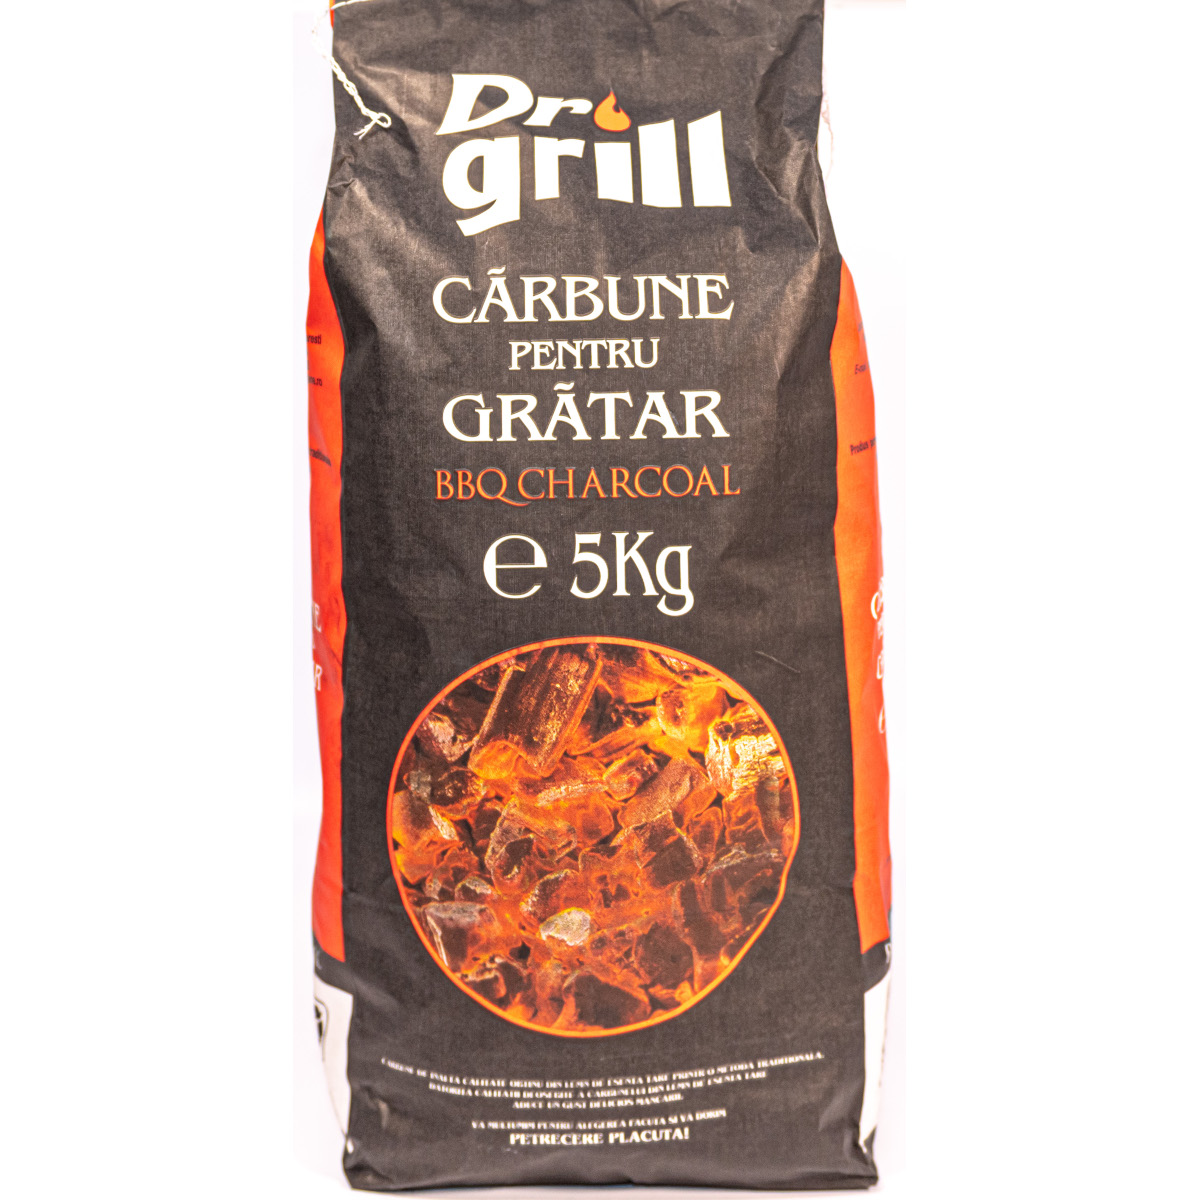 To separate Giraffe thousand Carbune pentru gratar Dr. Grill, Salt Star Coporation, sac 5kg - BBQ  INGREDIENTS